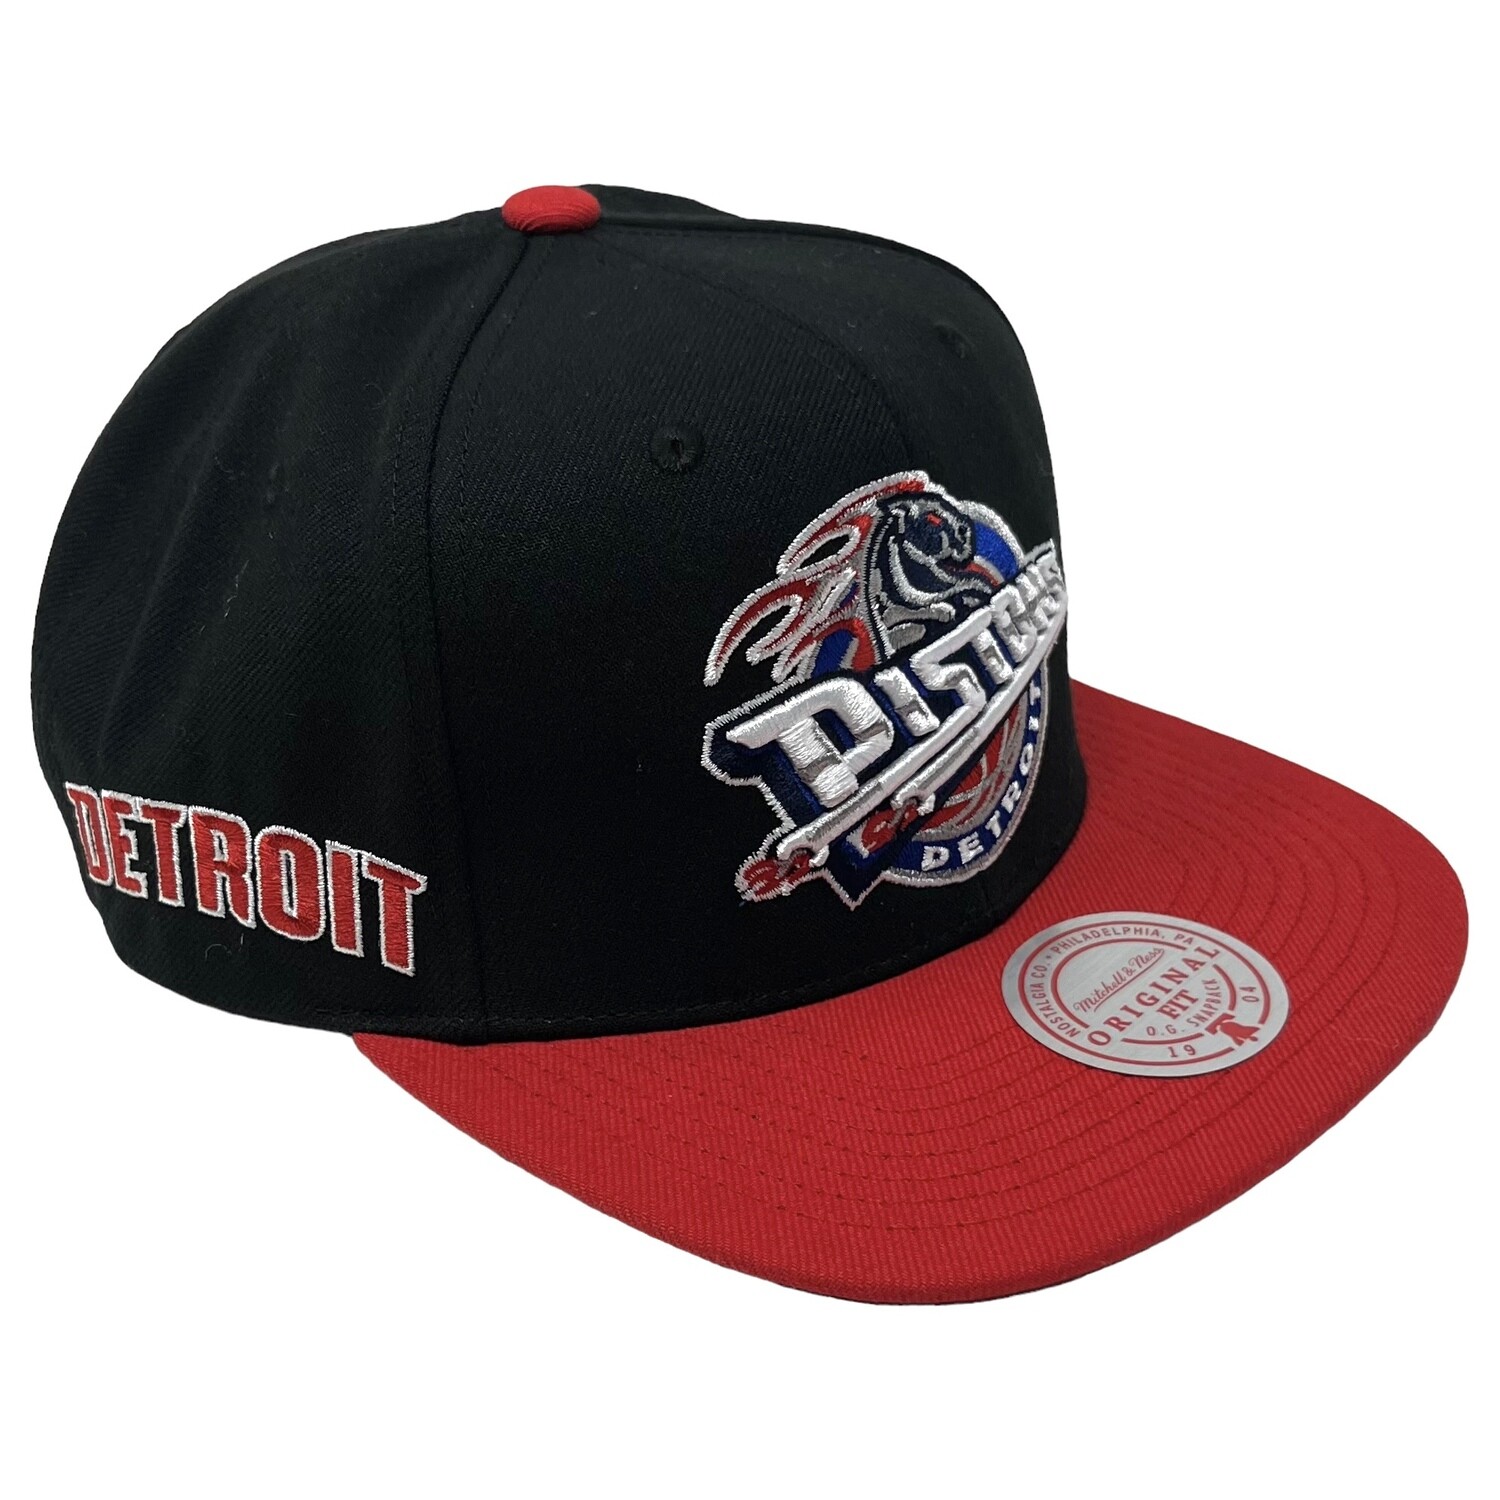 MITCHELL & NESS - Detroit Pistons Hat